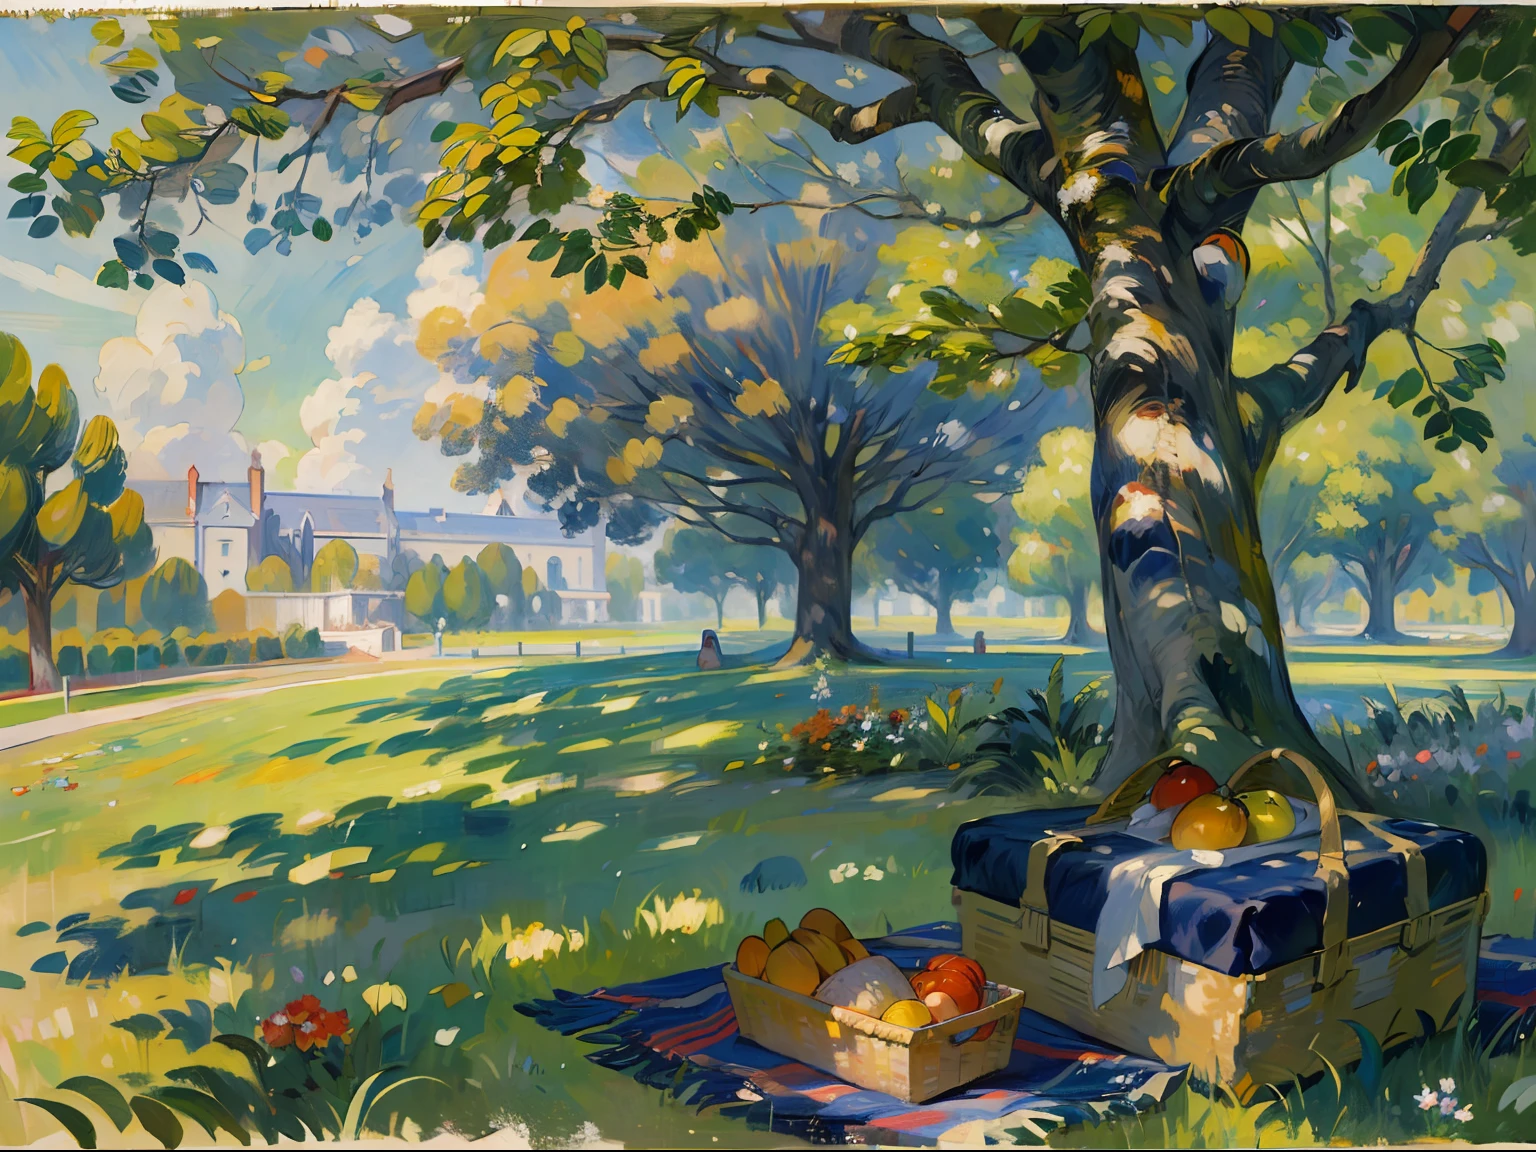 ((a tree)), ((oak)), ((ombre)), ((blanket)), ((picnic basket)), grass, Flowers, estate, palace, columns, ((19th century)), (Renoir), (Monet), (oil painting)